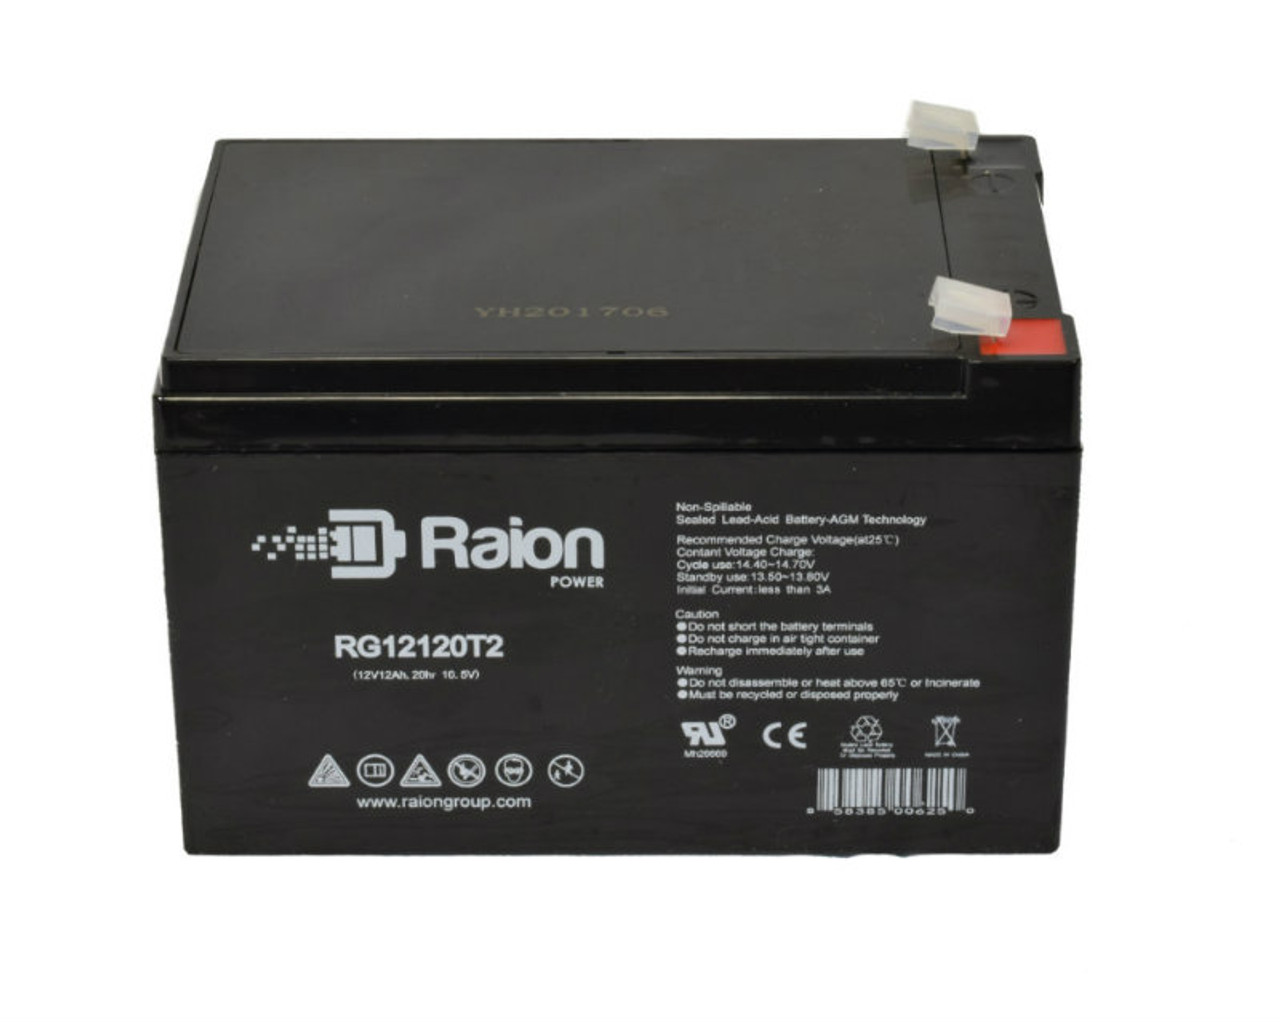 Raion Power RG12120T2 SLA Battery for Sealake FM12100